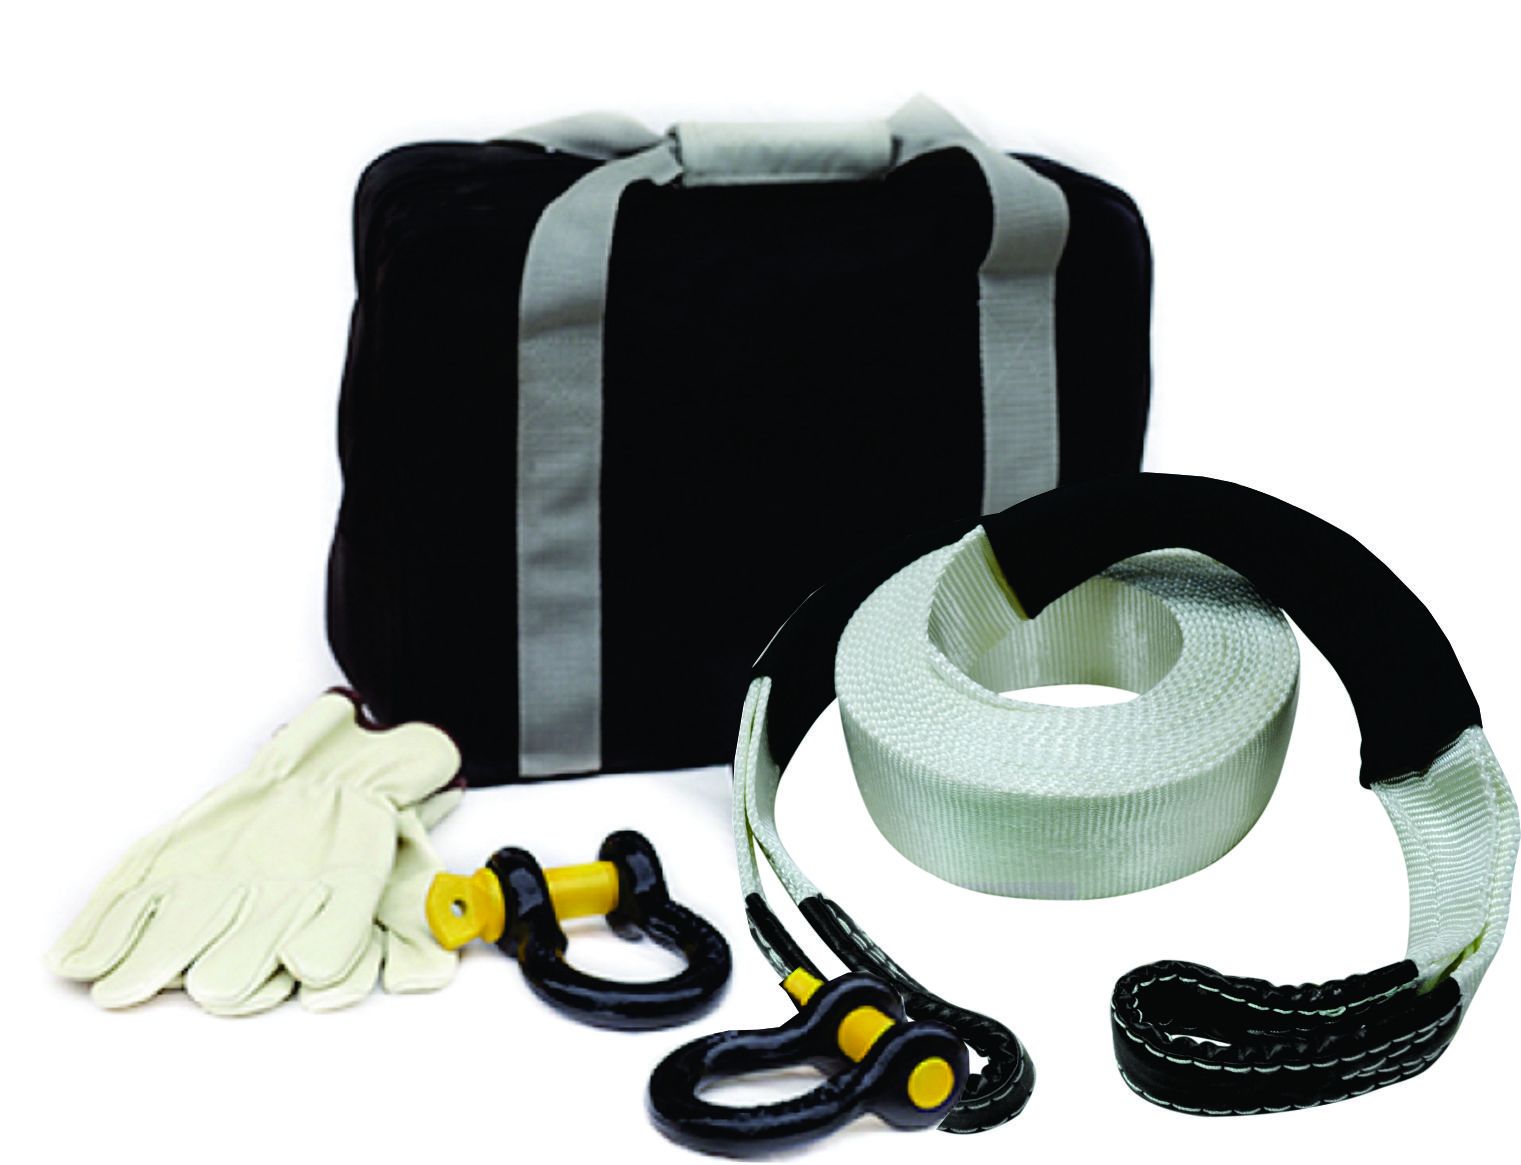 Roadsafe 4 piece 4WD Recovery kit (bag, snatch strap, shackles Gloves)